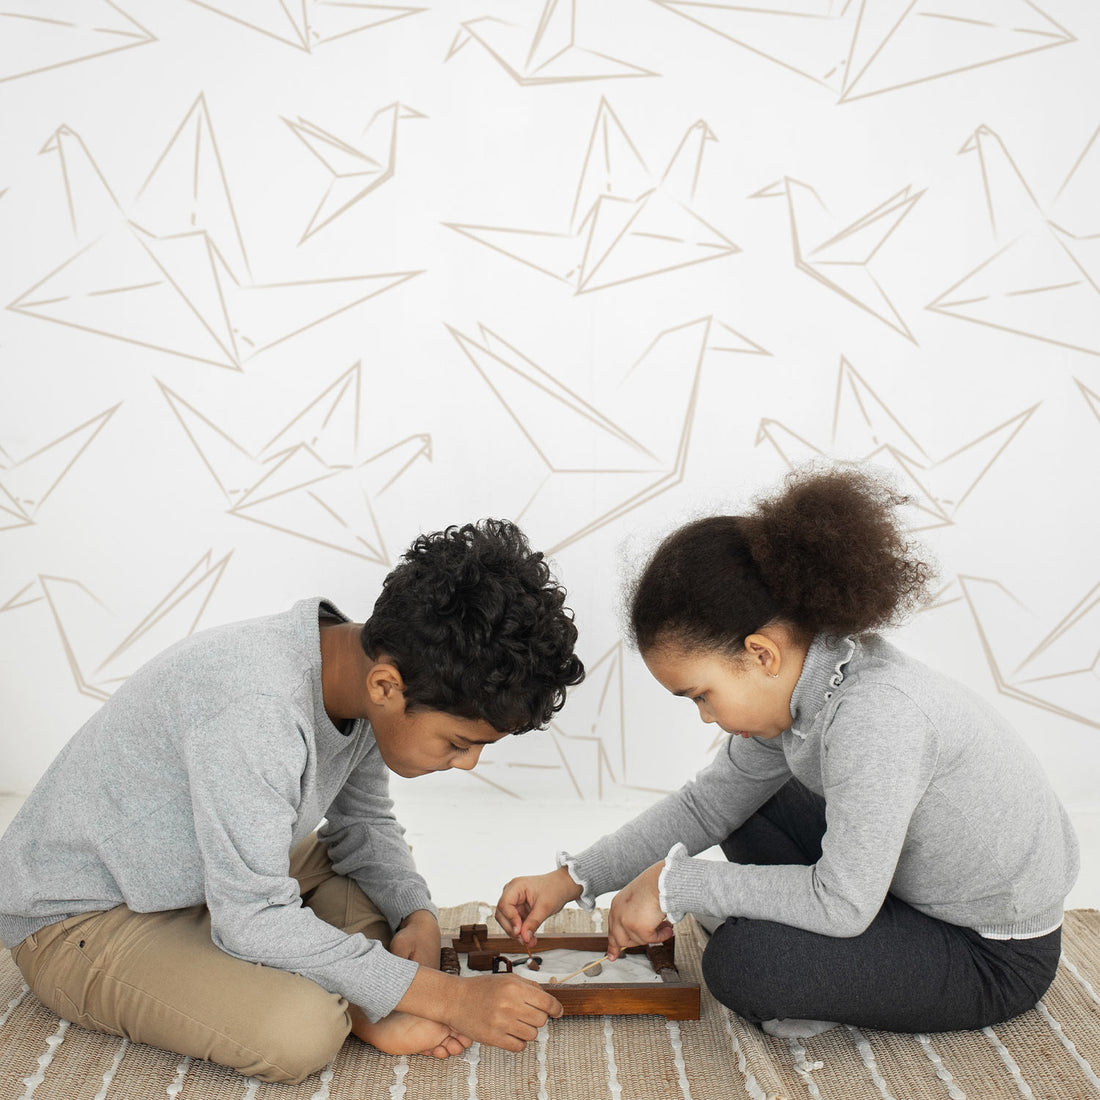 Minimal origami crane design removable wallpaper in scandinavian kids playroom interior